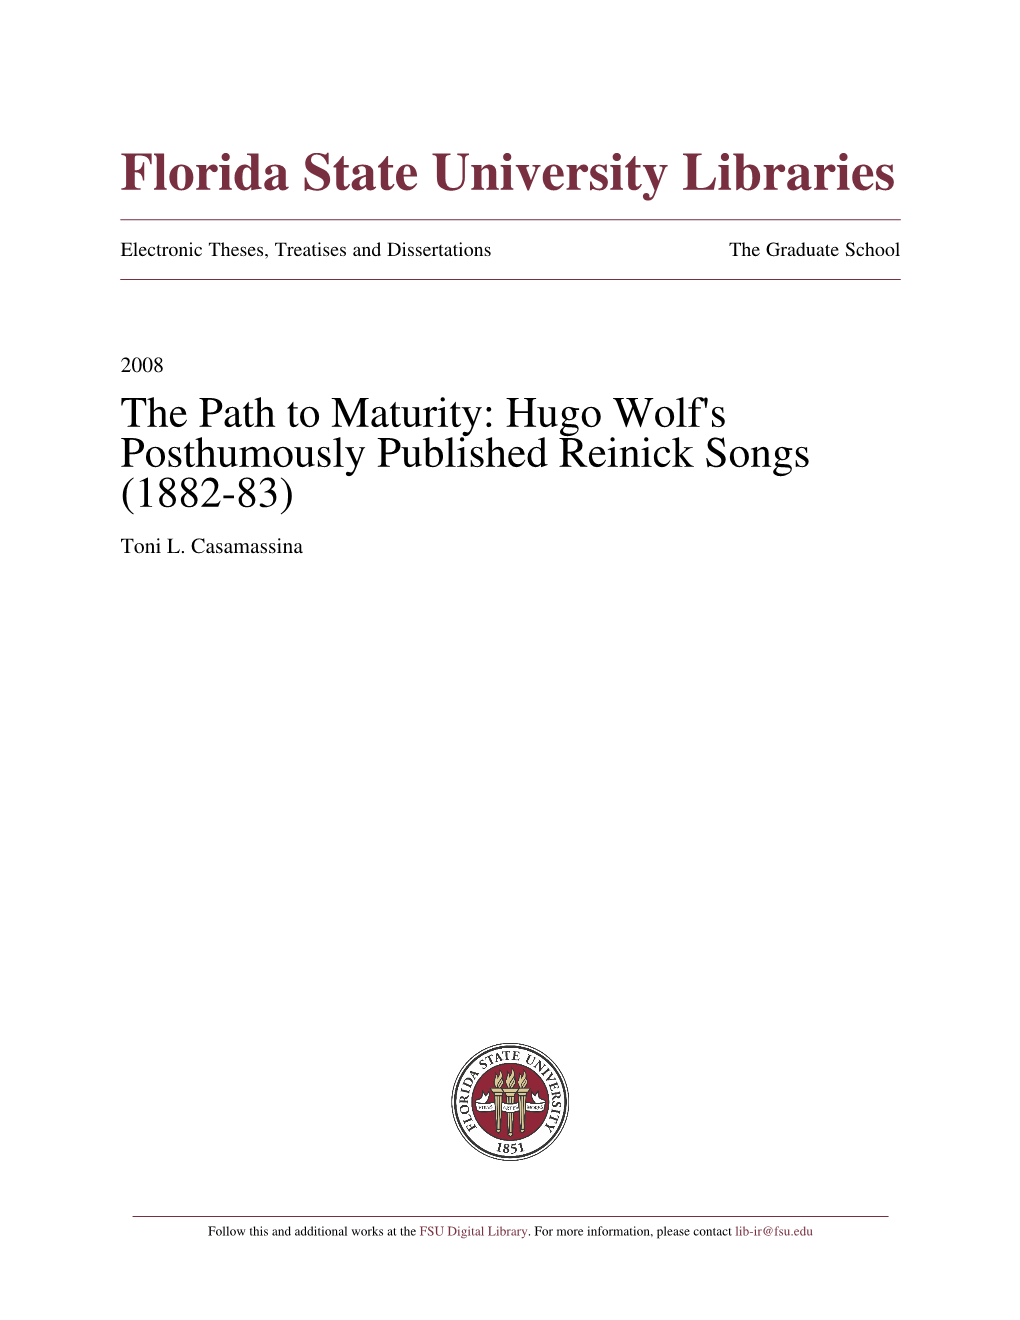 Hugo Wolf's Posthumously Published Reinick Songs (1882-83) Toni L